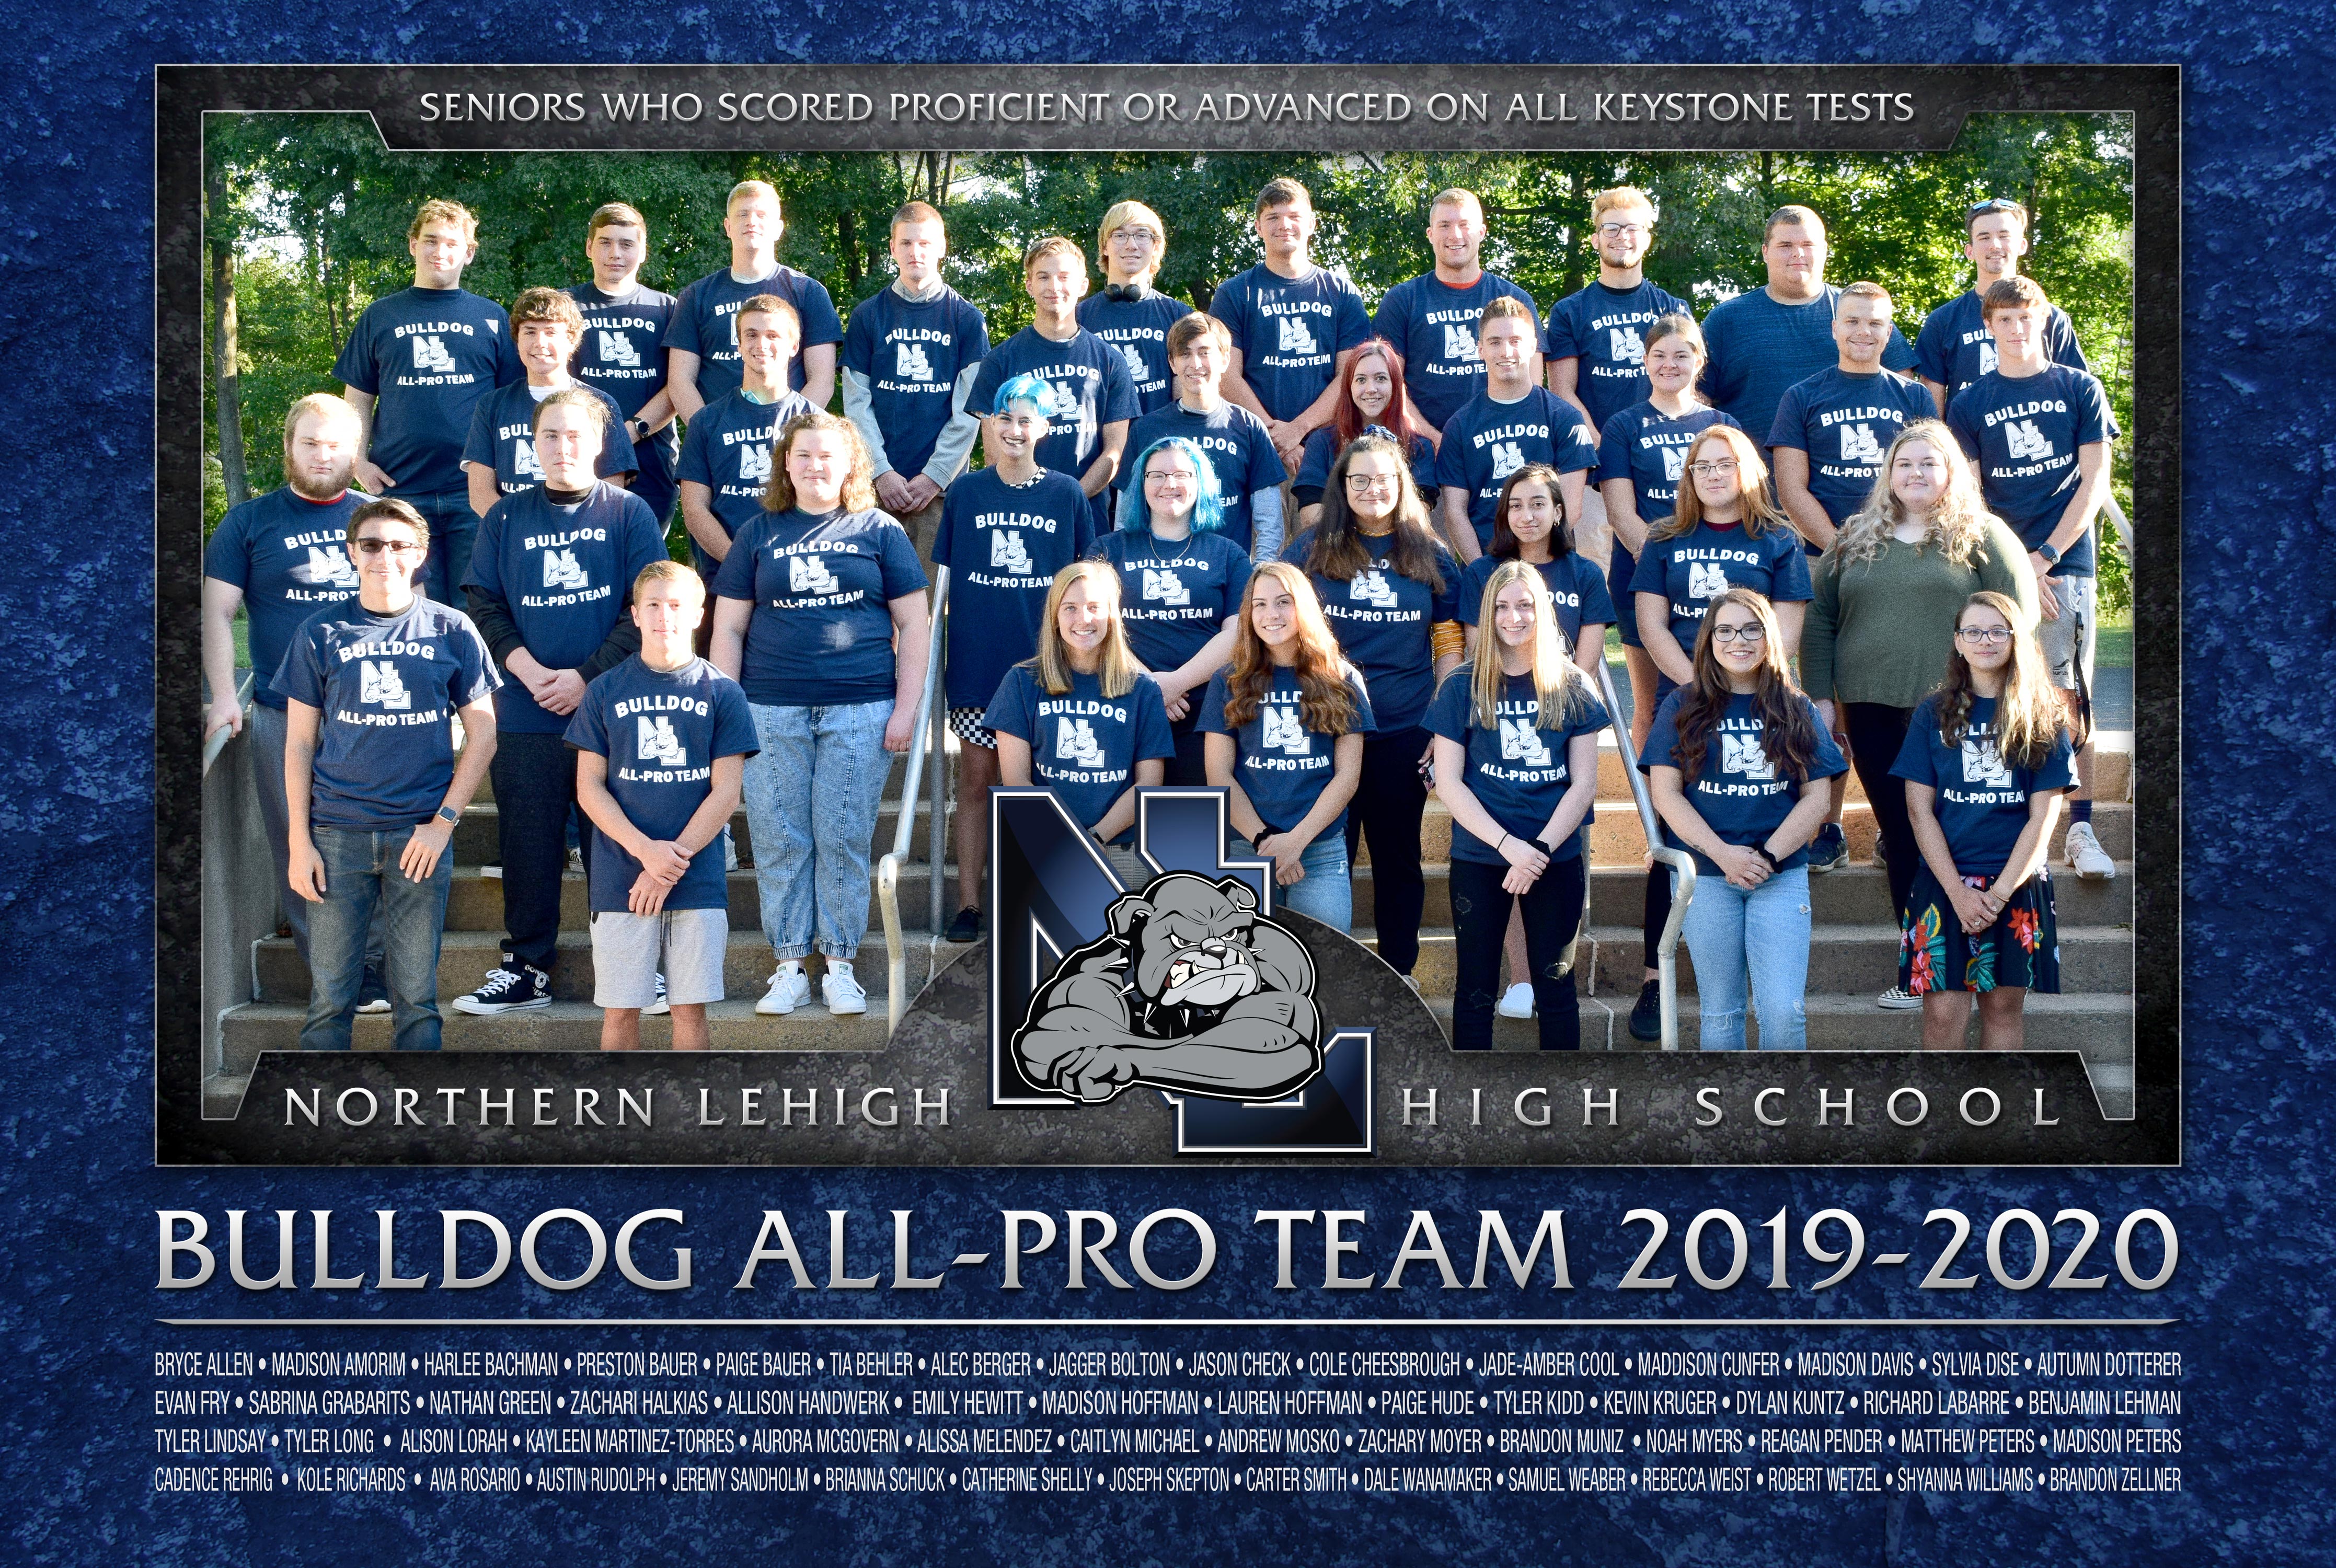 All Pro Team 2019-2020 